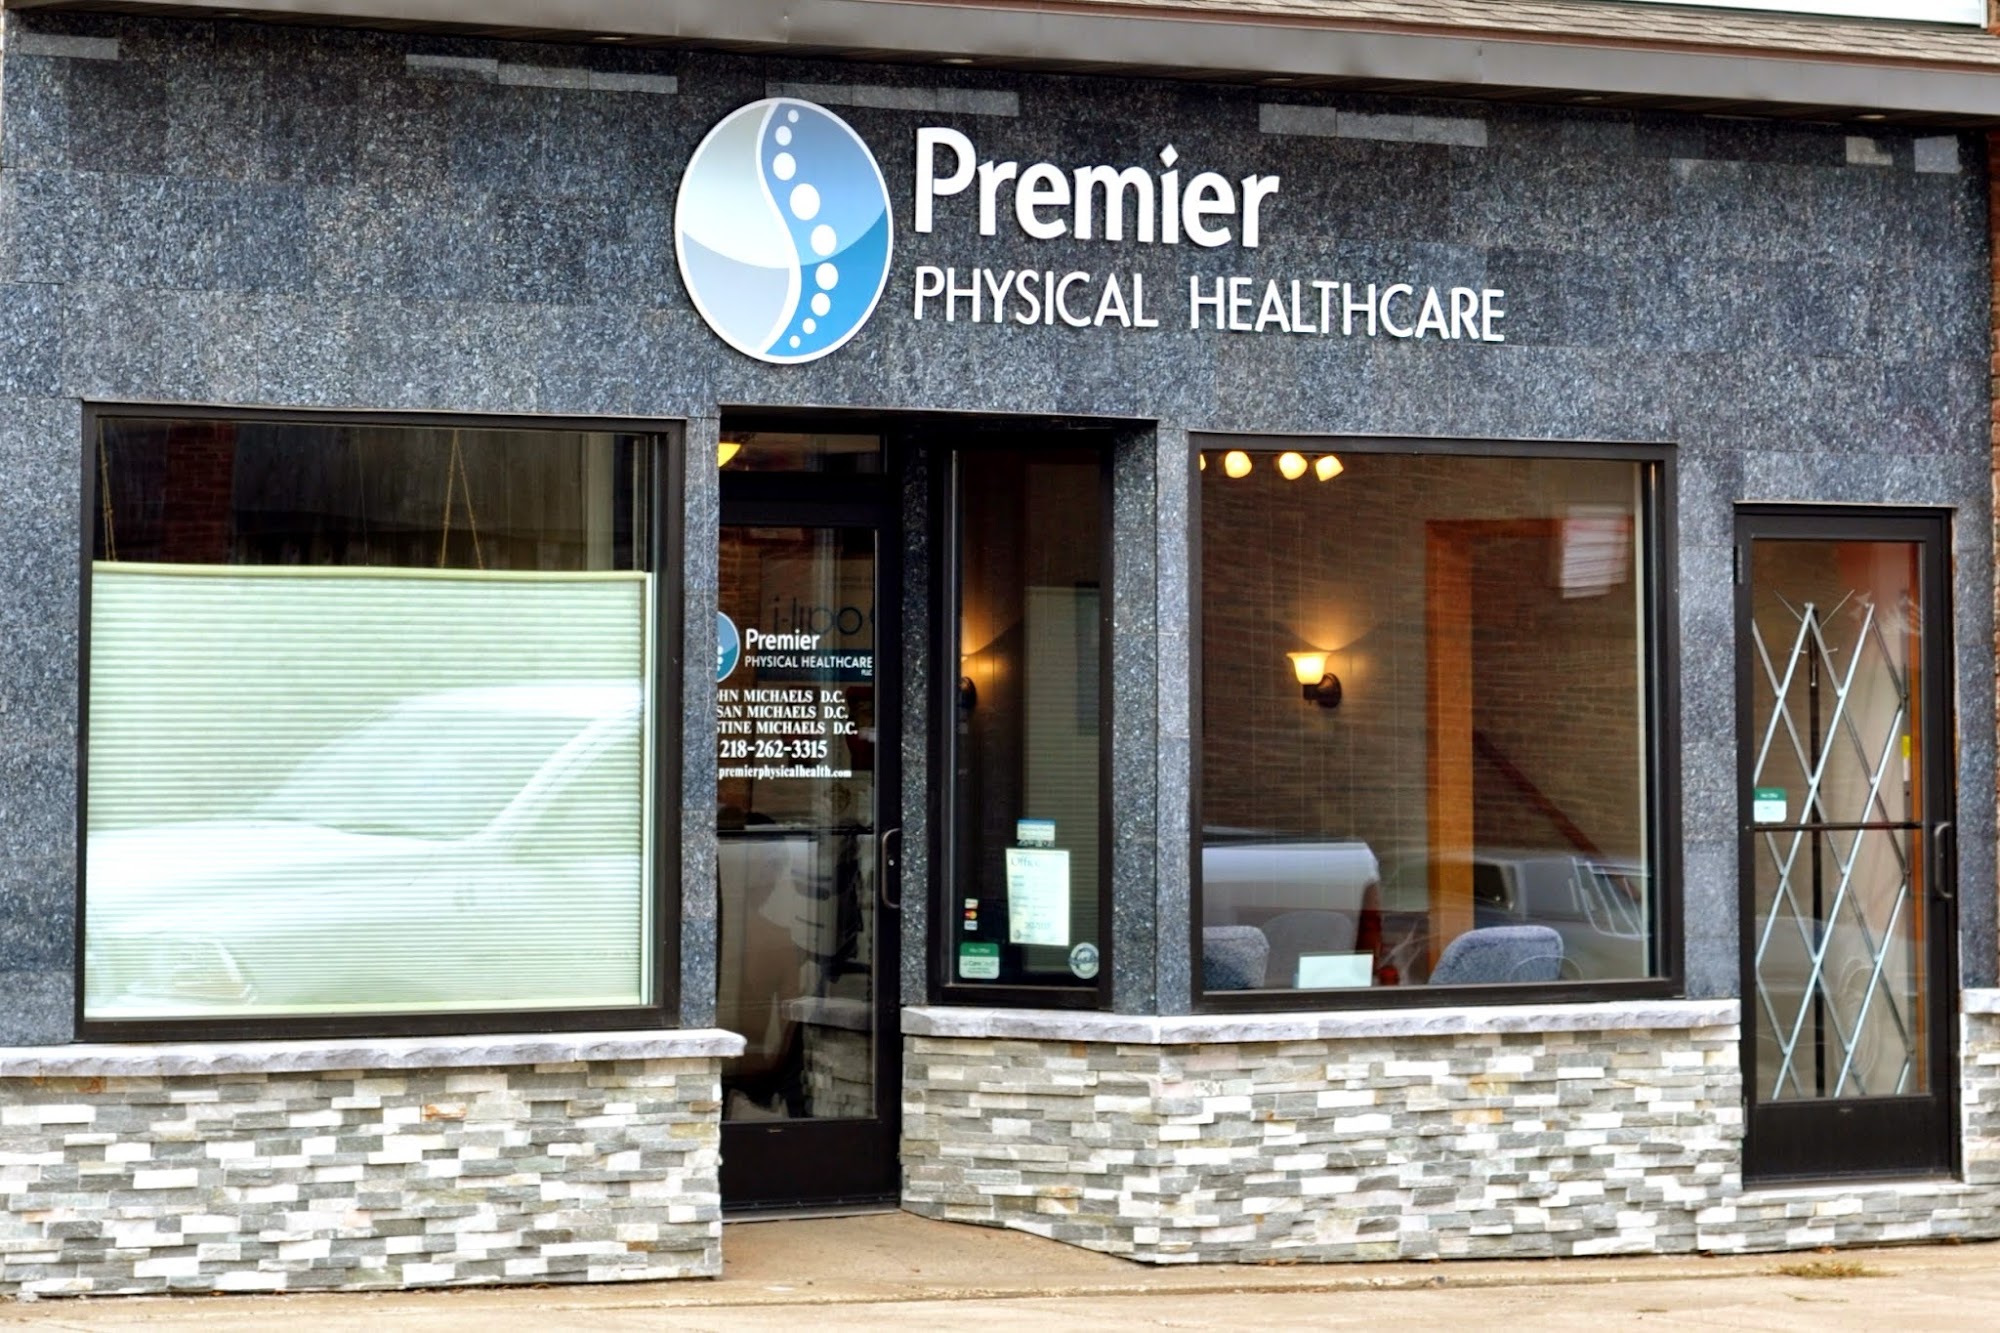 Premier Physical Healthcare 115 W Howard St, Hibbing Minnesota 55746